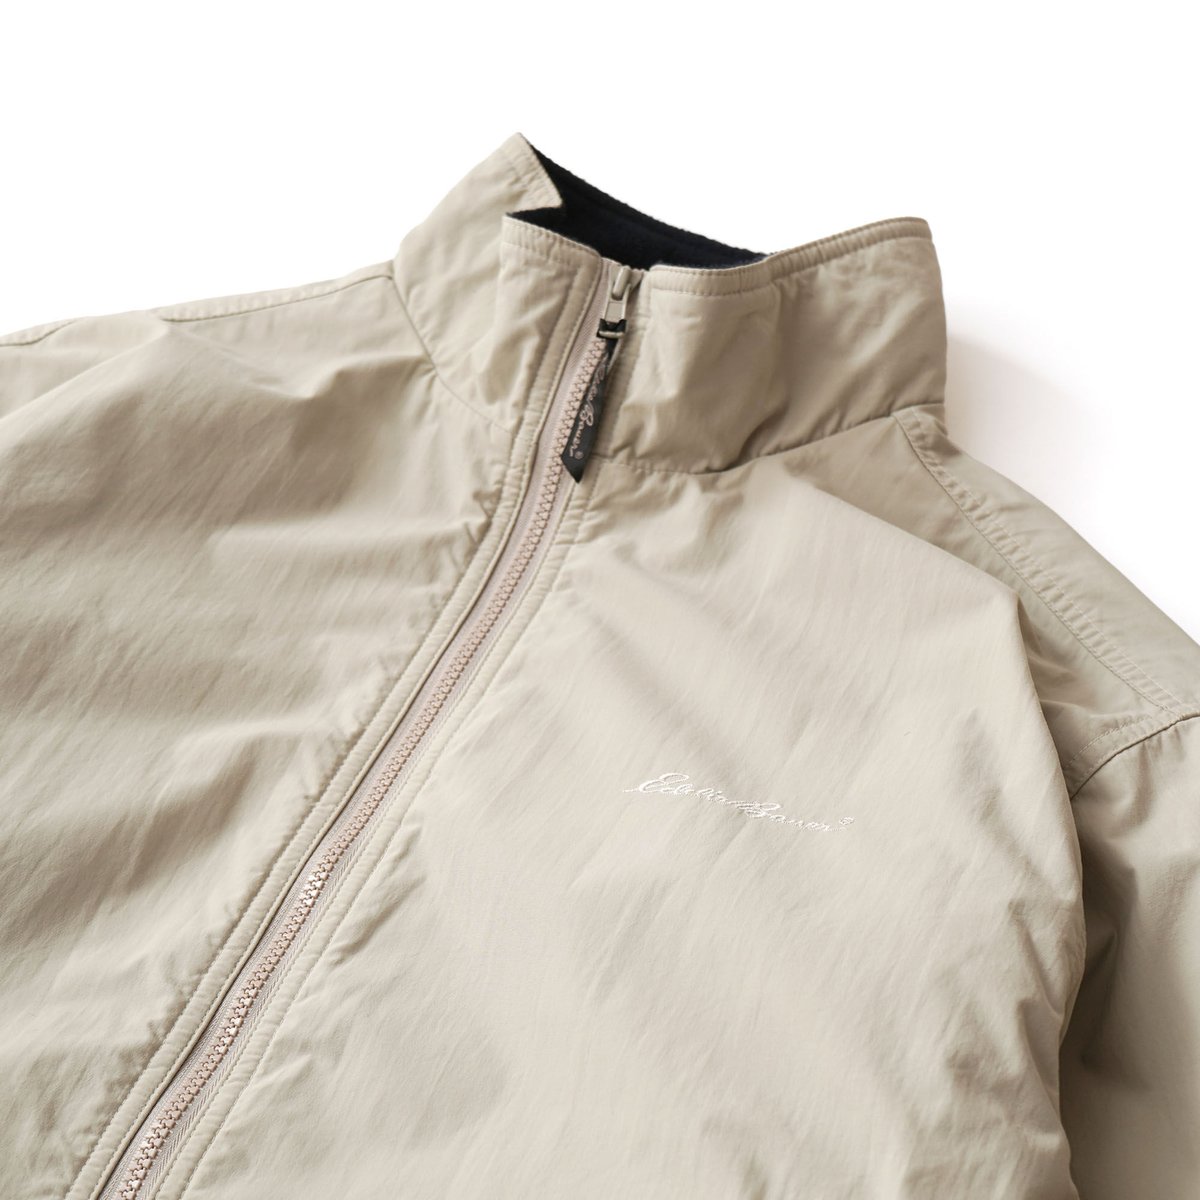 Eddie Bauer / Vintage, Fleece Lined Jacket 